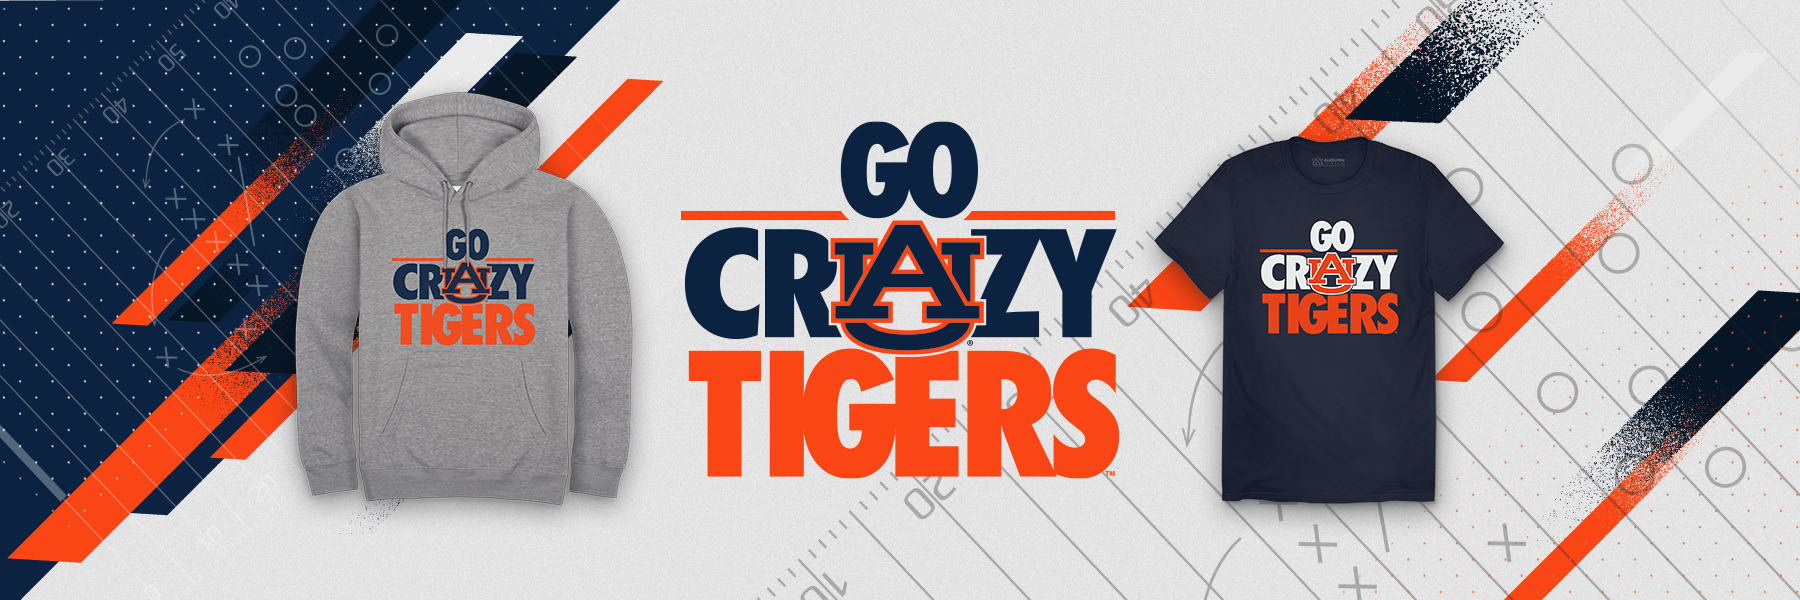 Go Crazy Tigers